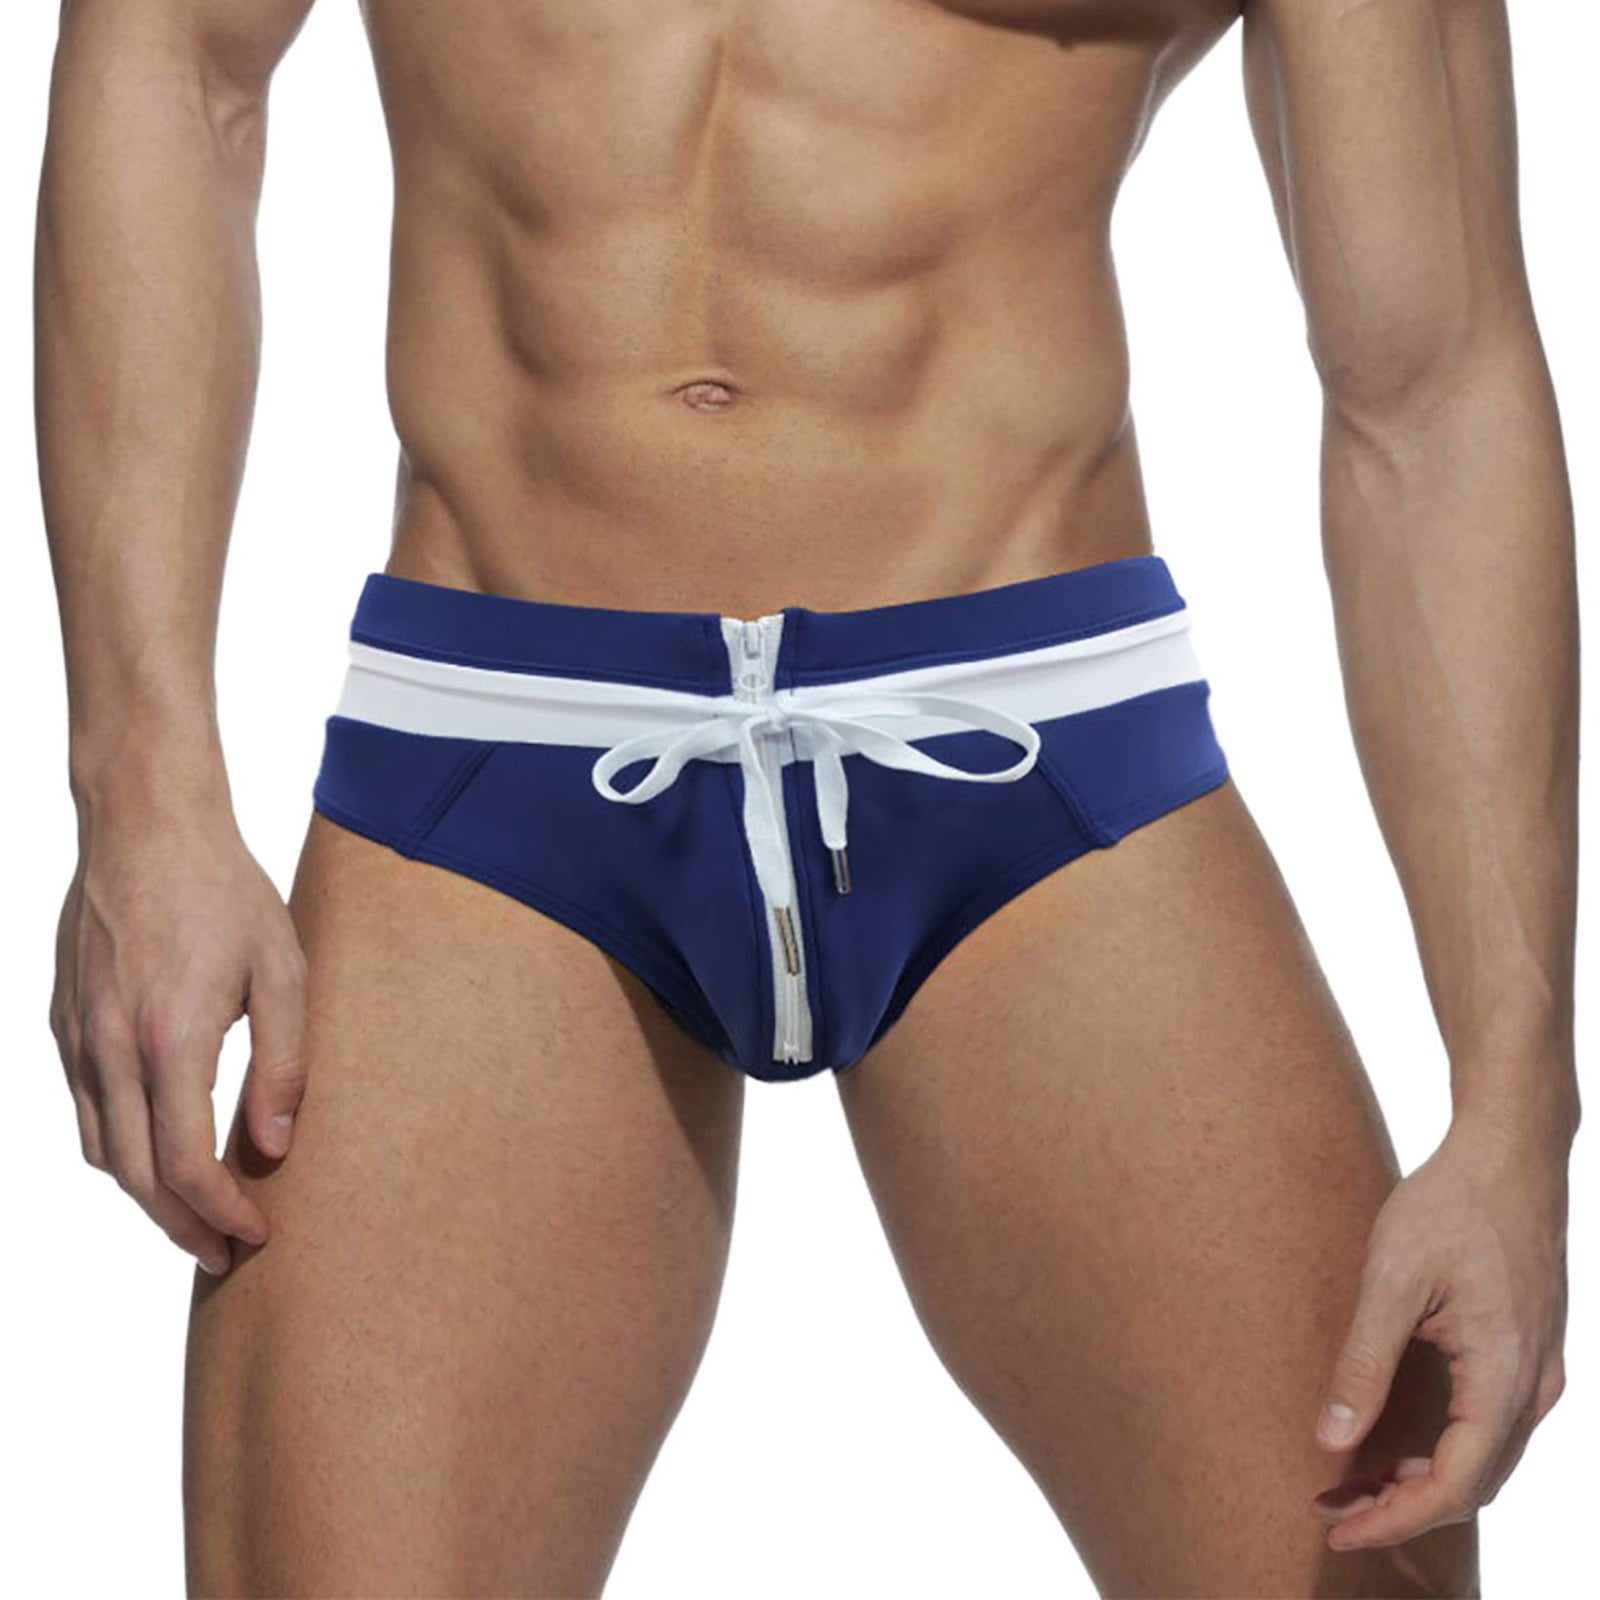 SQUARE HEAD Men's Underwear Bulge Enlarge Enhancing Cup Sponge Pad for  Swimwear Brief Shorts Underwear Padded